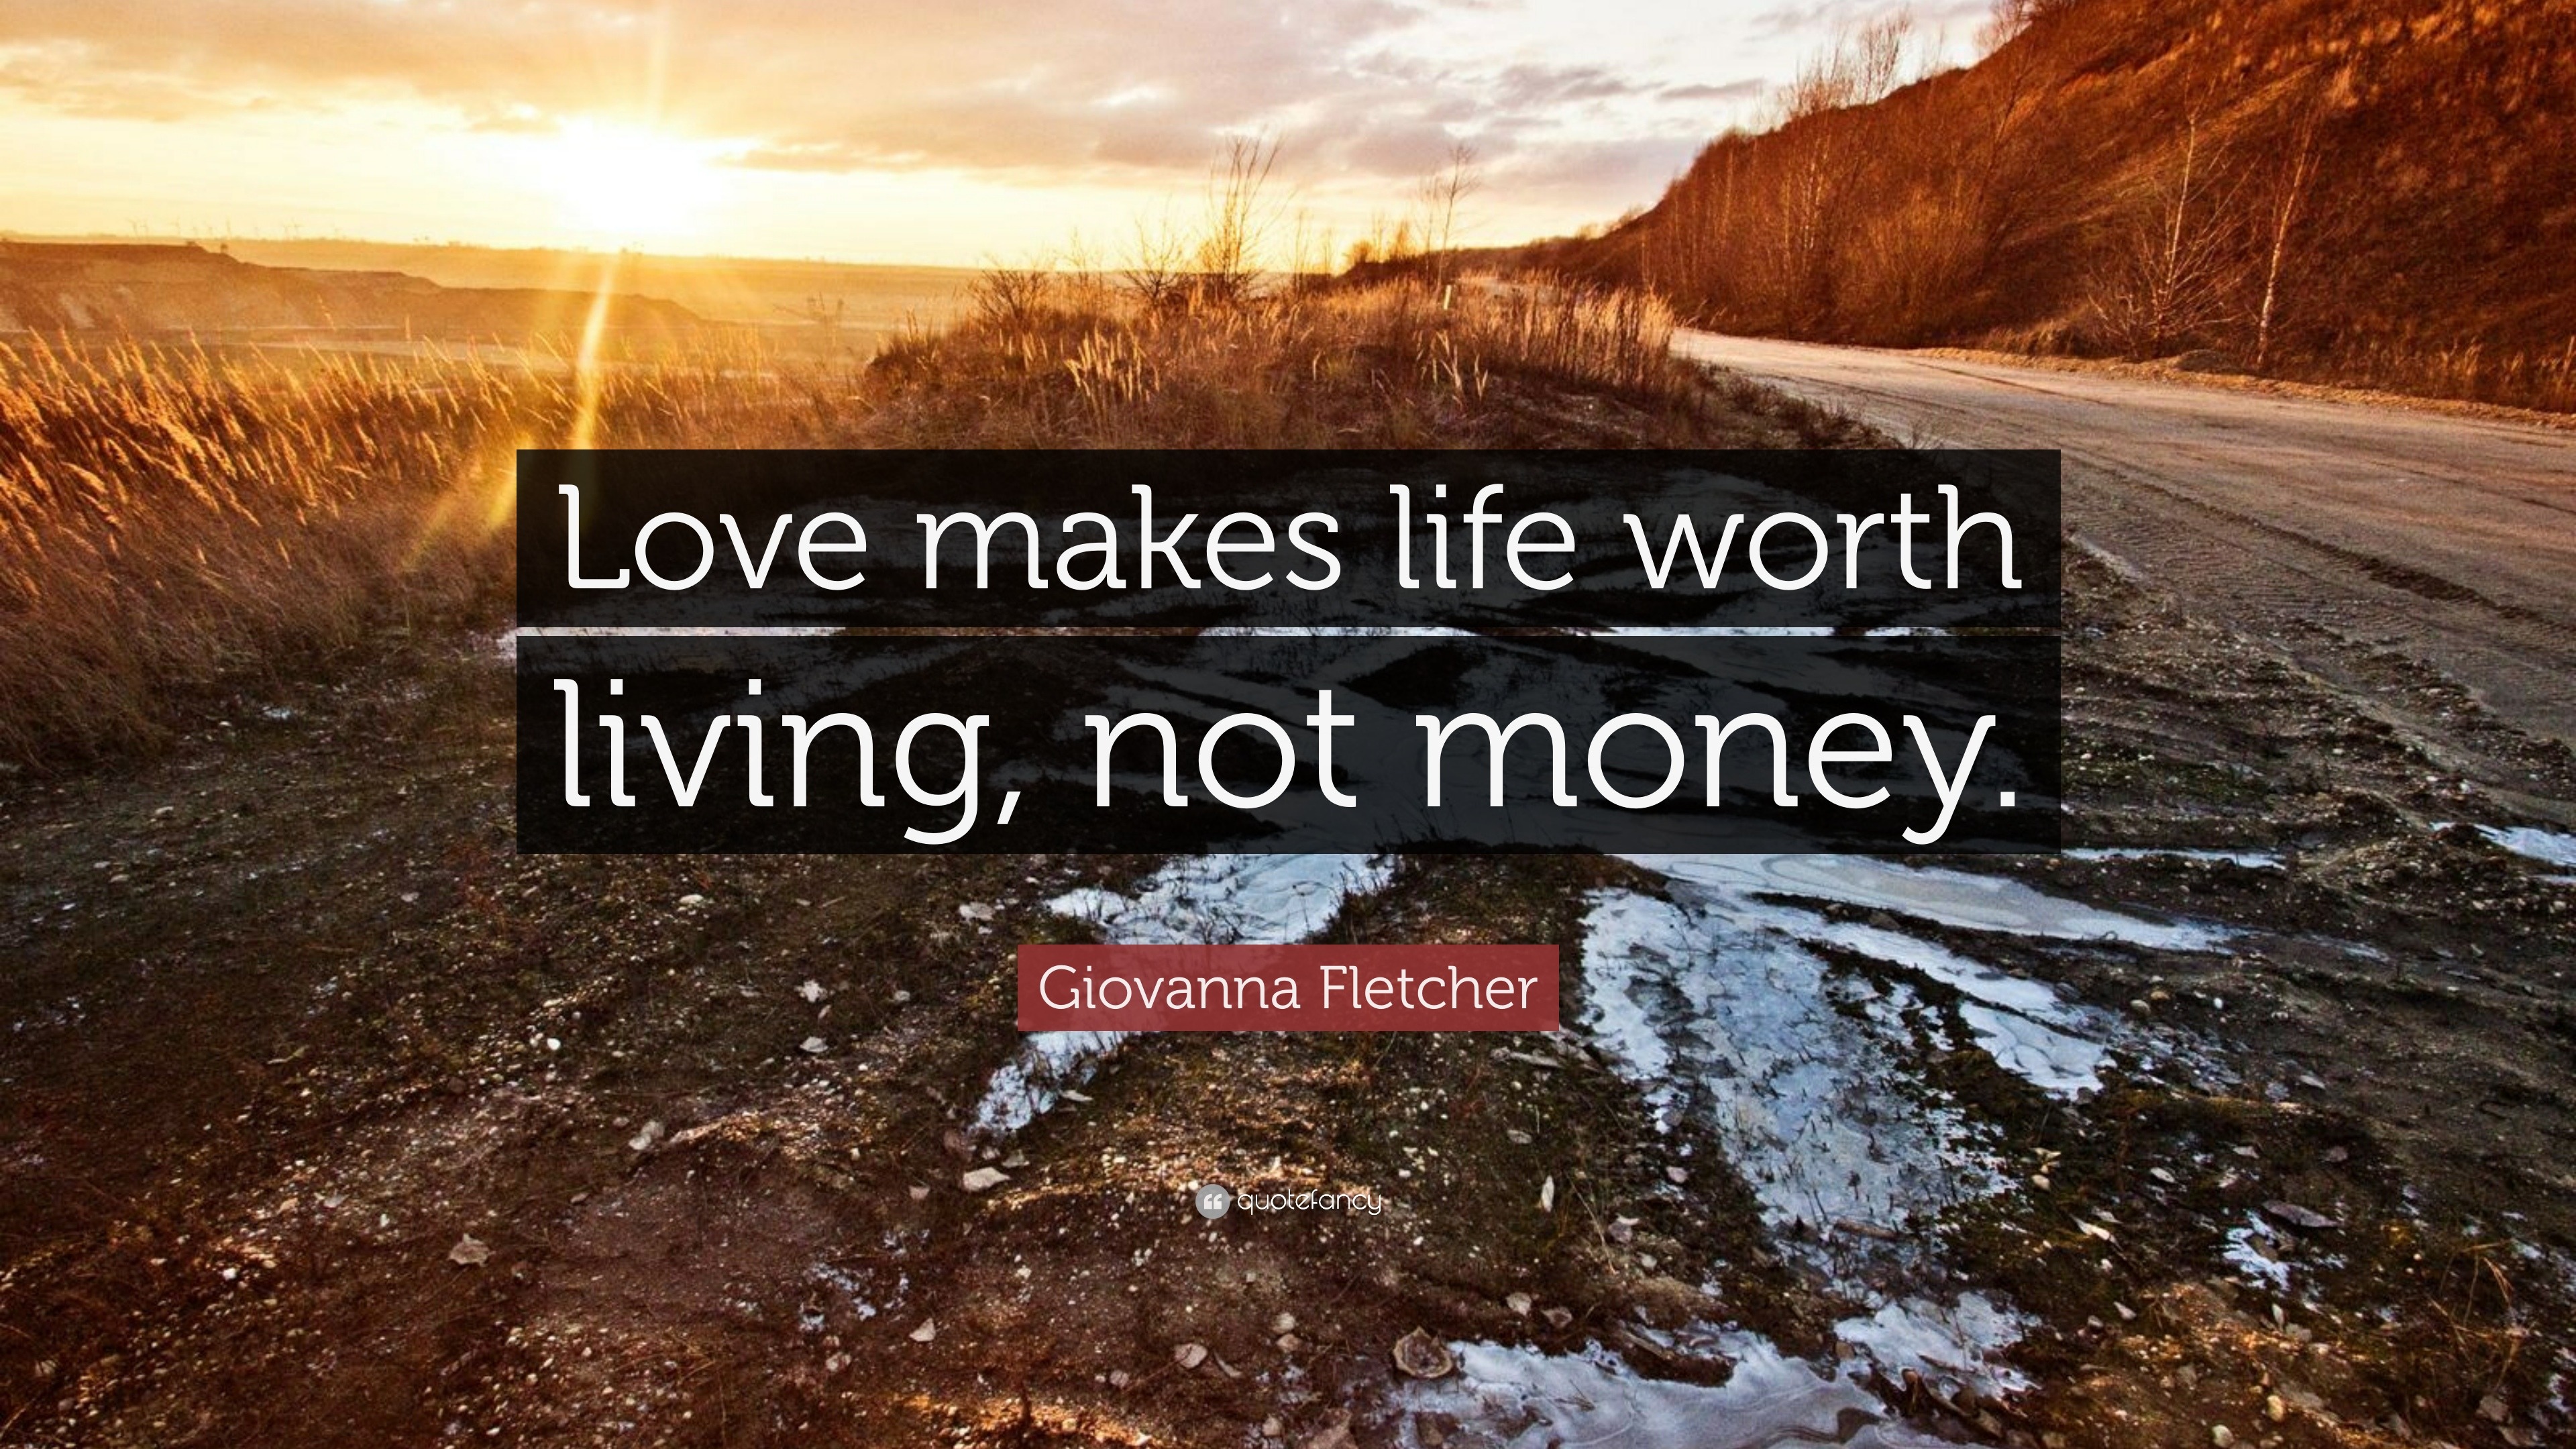 Giovanna Fletcher Quote “Love makes life worth living not money ”